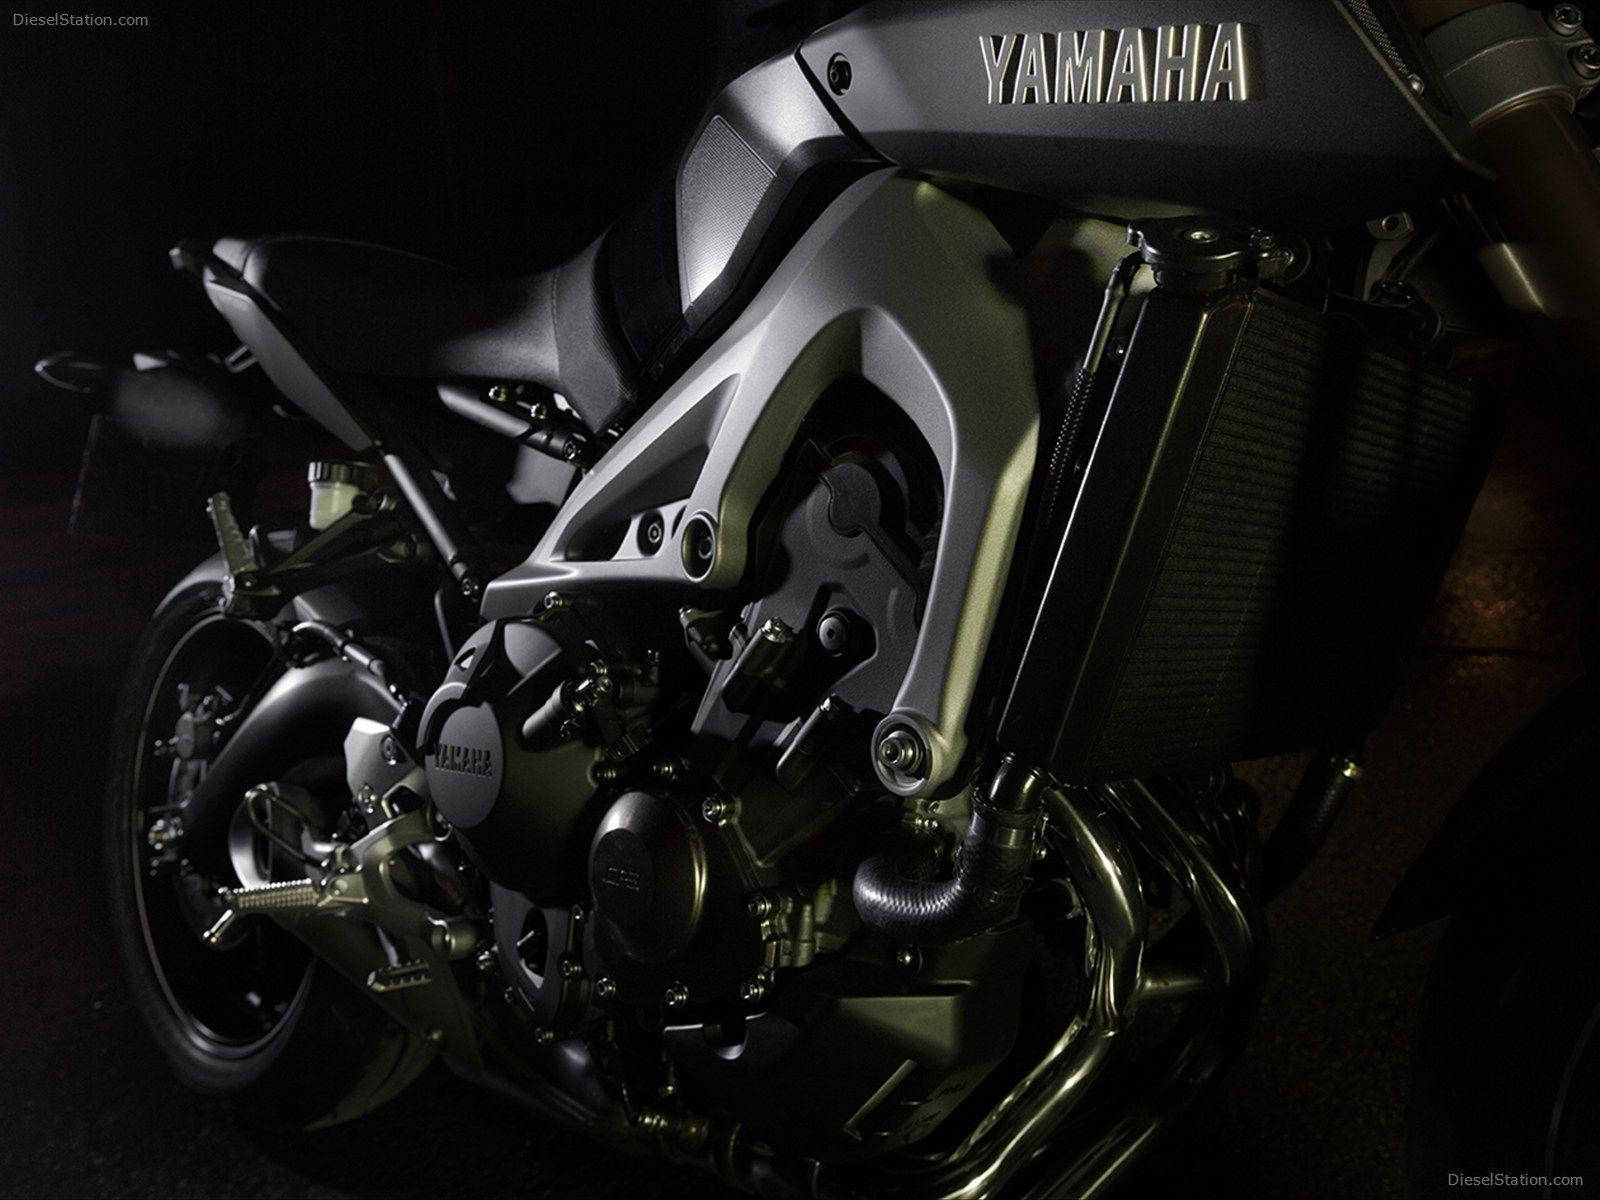 Revealing Power - A Close-up Image Of Yamaha Mt 15 Engine